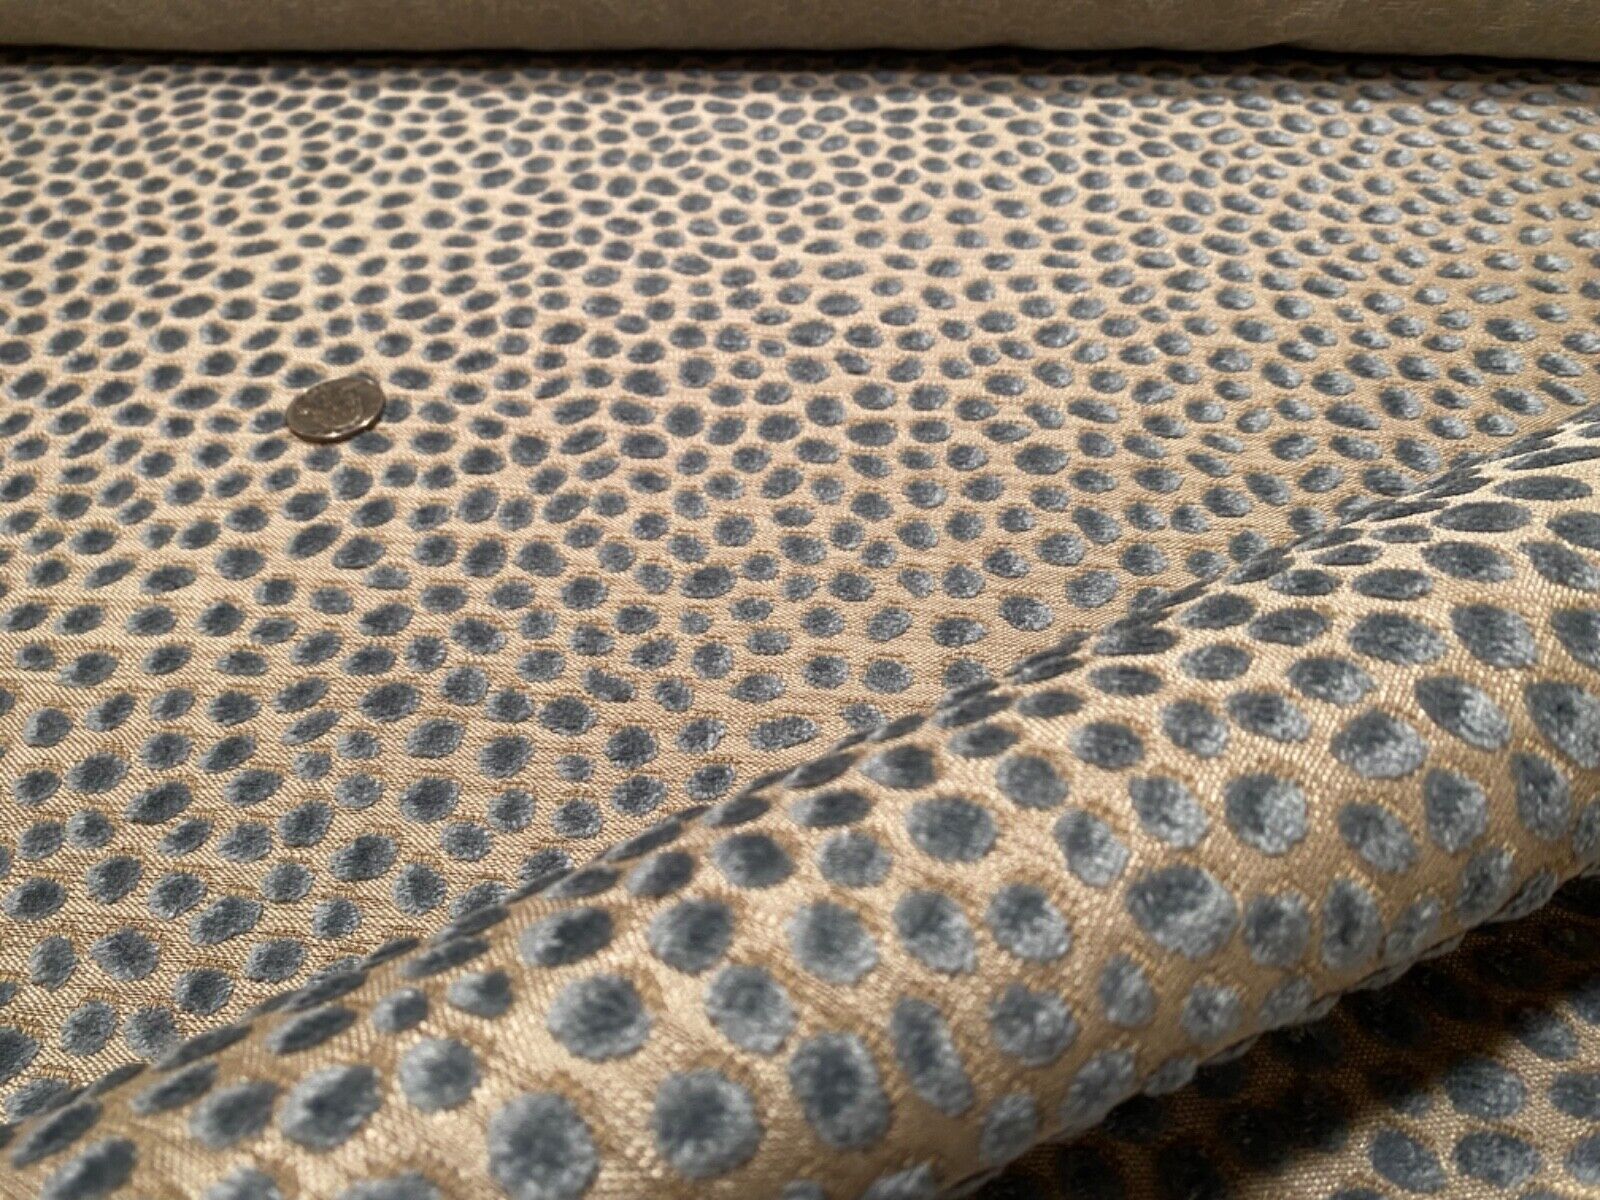 6YD LEE JOFA Baker Lifestyle Cosma Smoke Dots Woven Fabric Belgium $1320 Retail